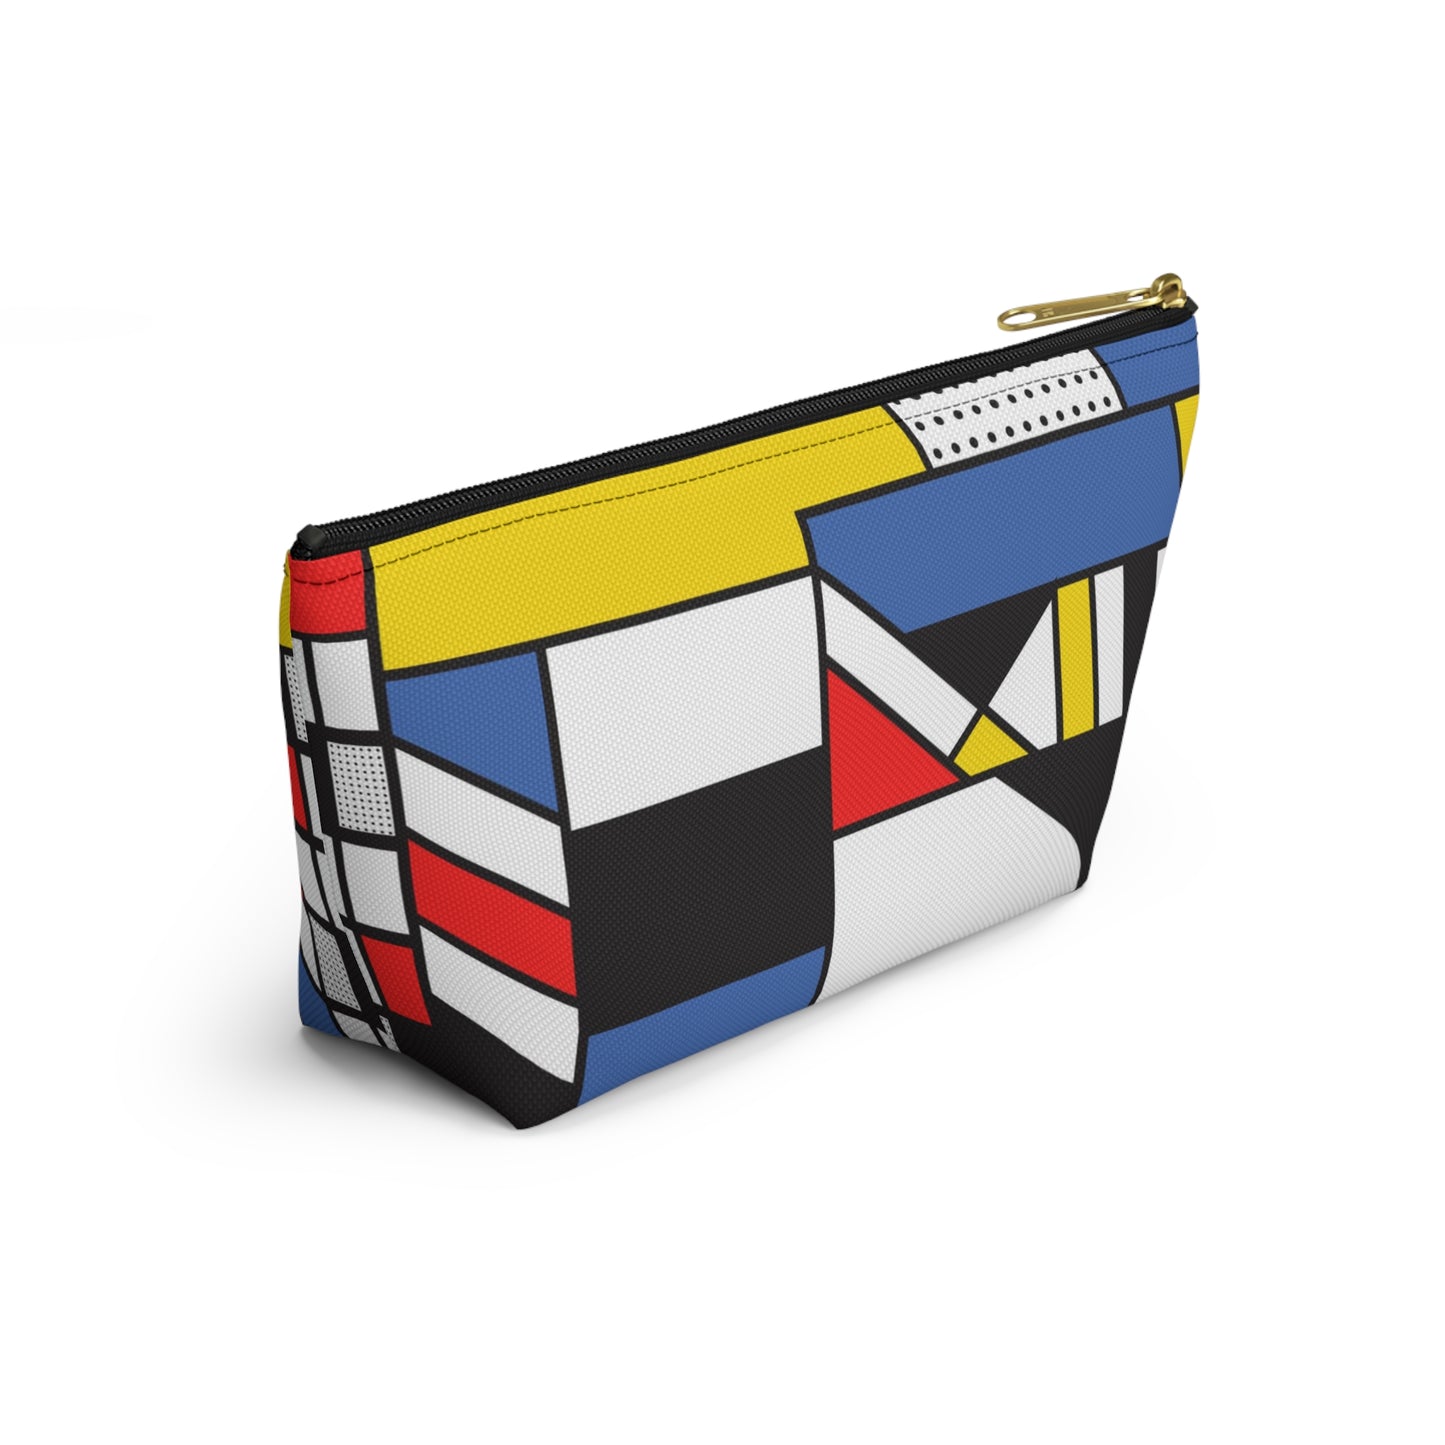 Accessory Pouch w T-bottom, Gift for women, gift for girlfriend, Mondrian design